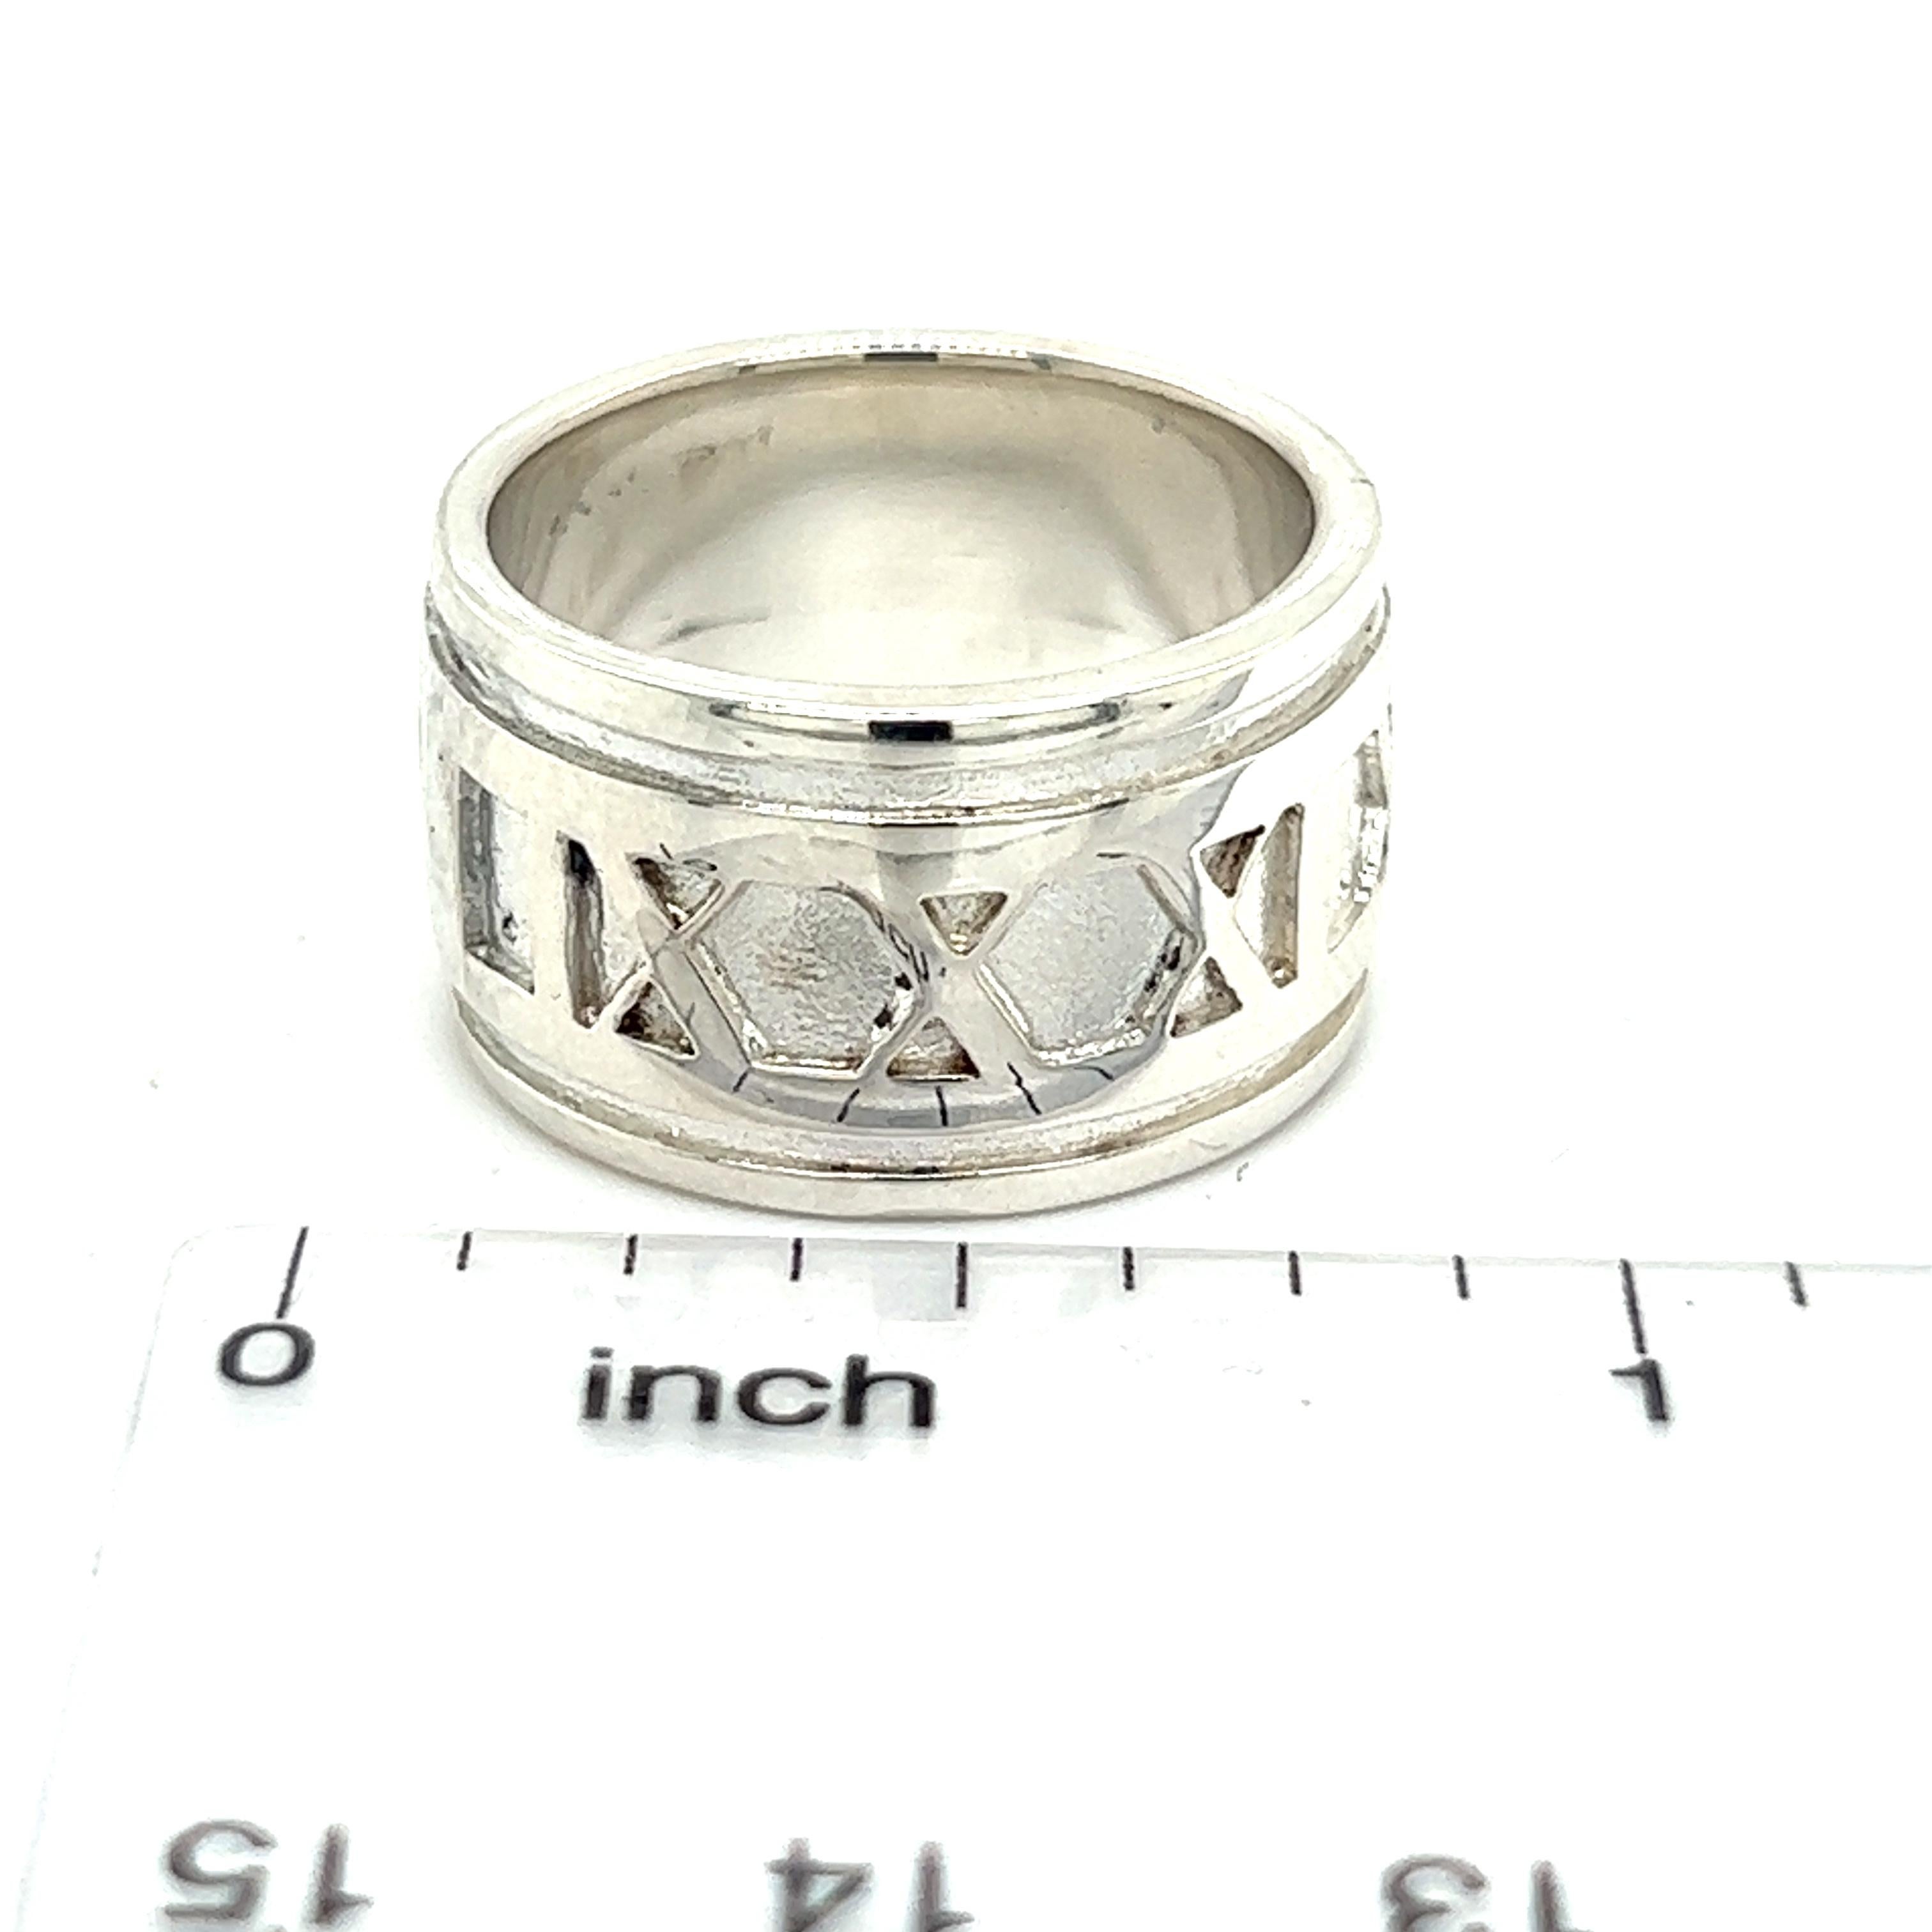 tiffany atlas ring silver